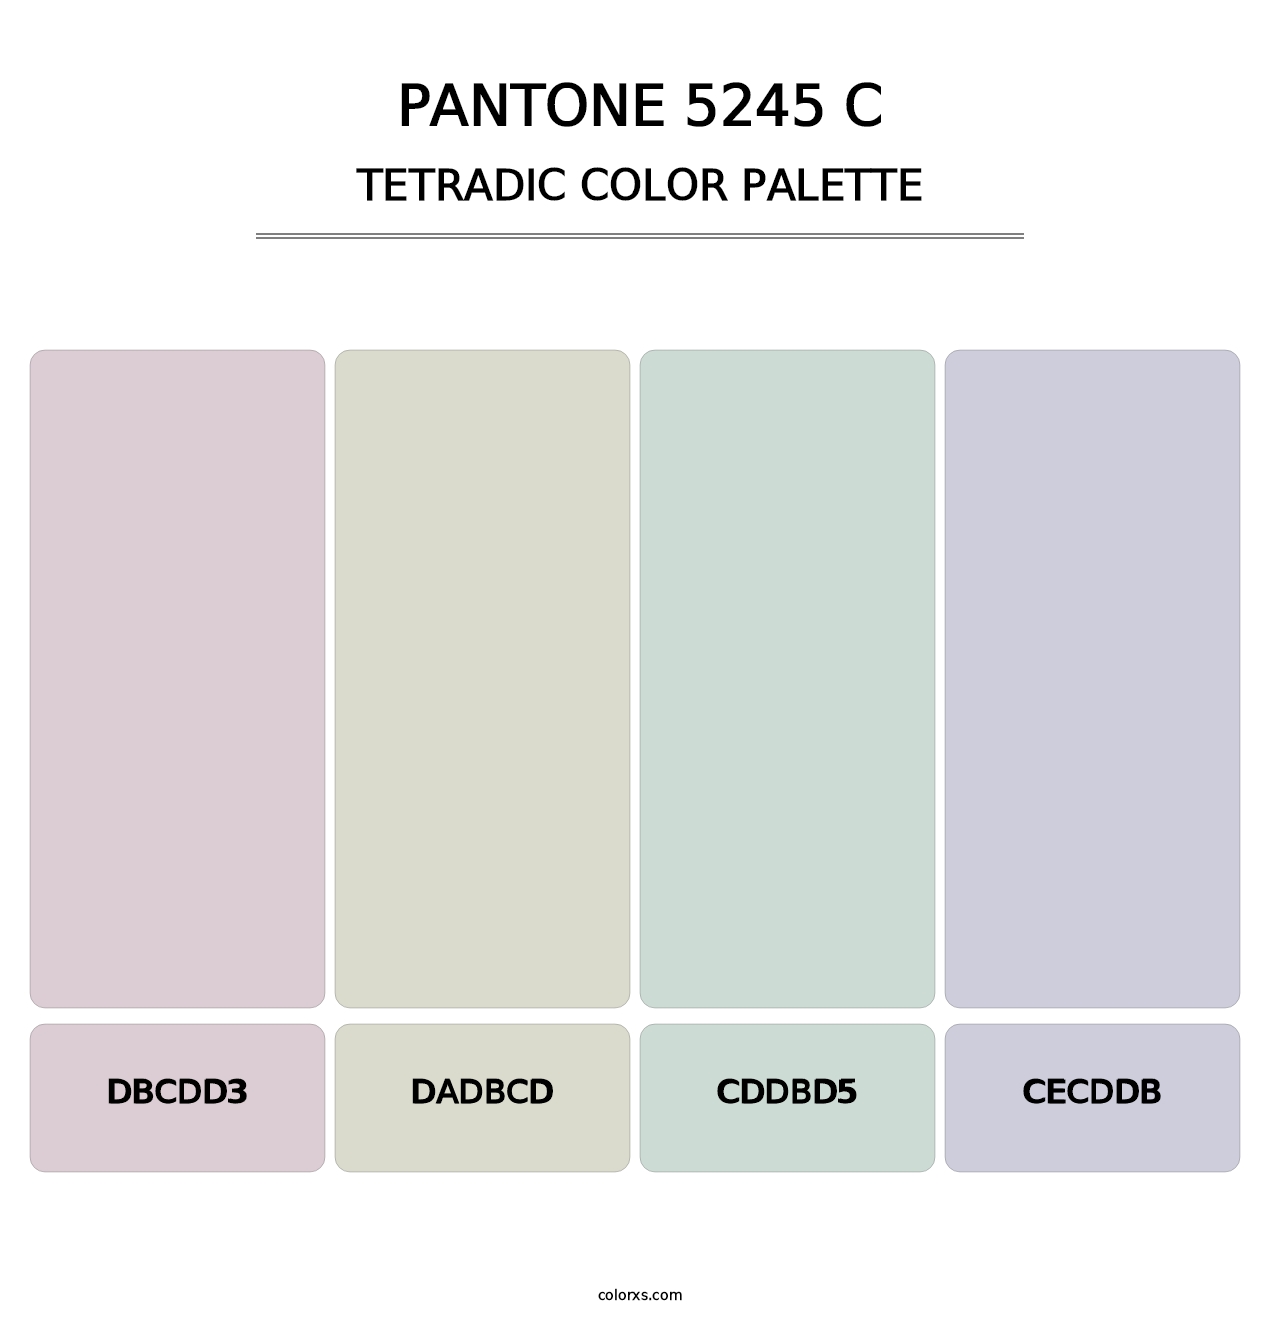 PANTONE 5245 C - Tetradic Color Palette